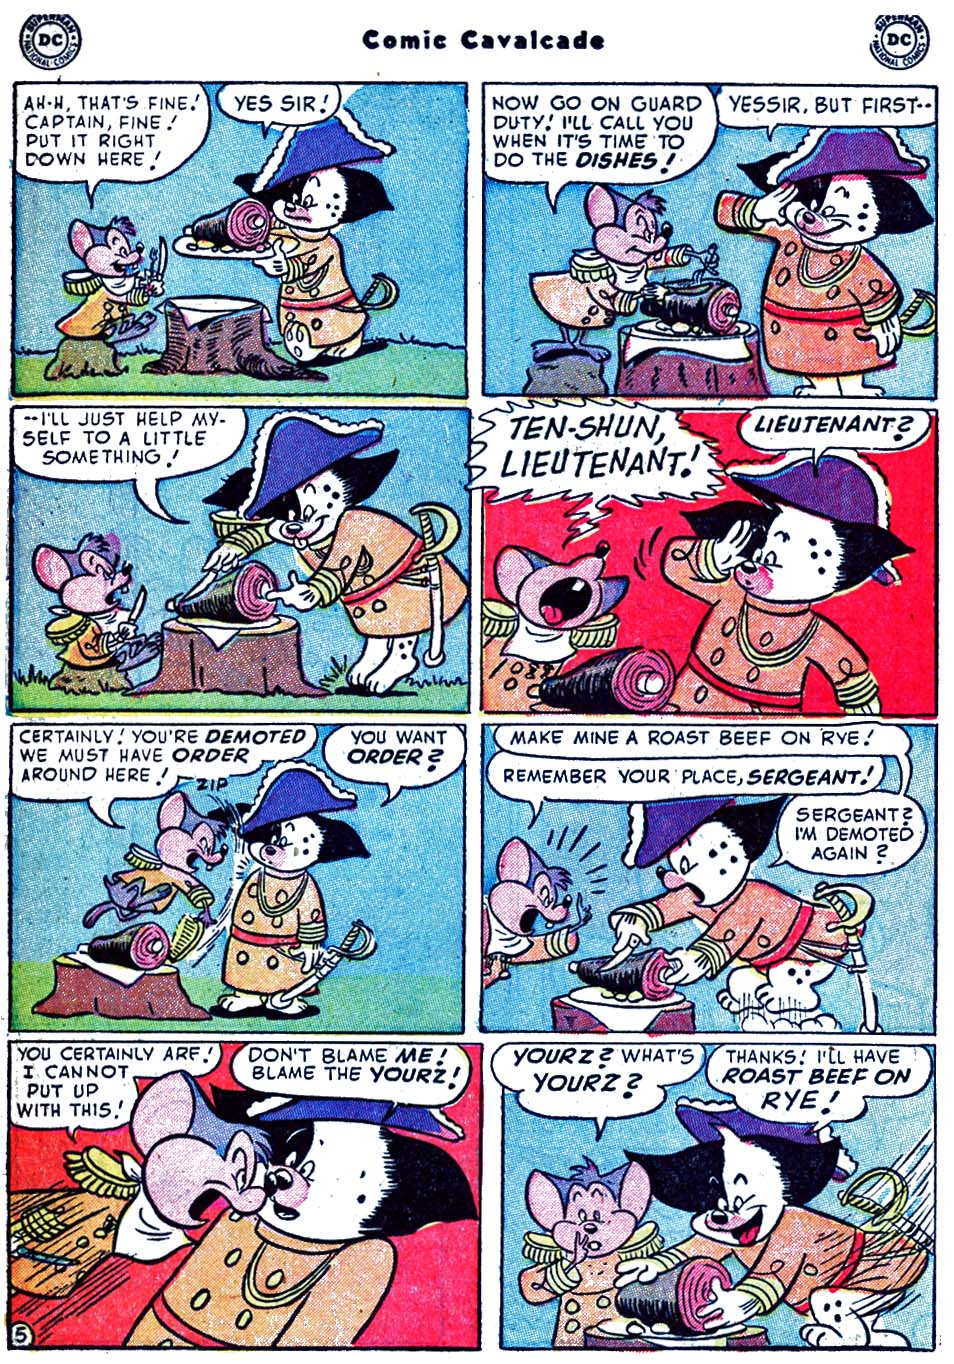 Comic Cavalcade issue 55 - Page 40